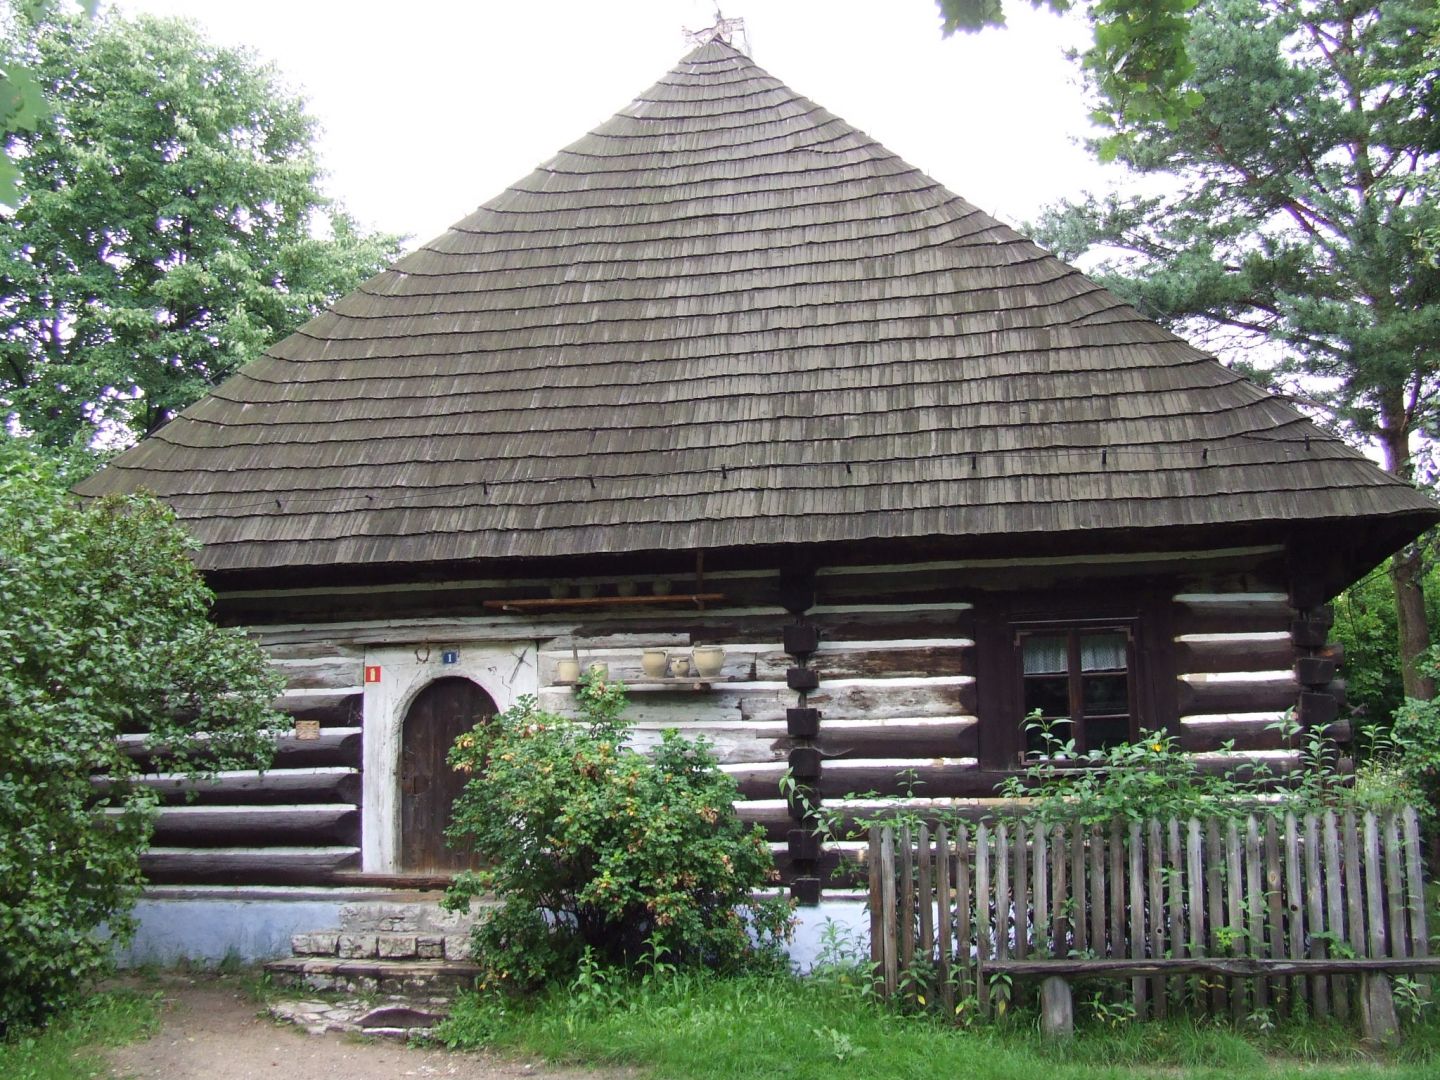 Vistula Ethnographic Park